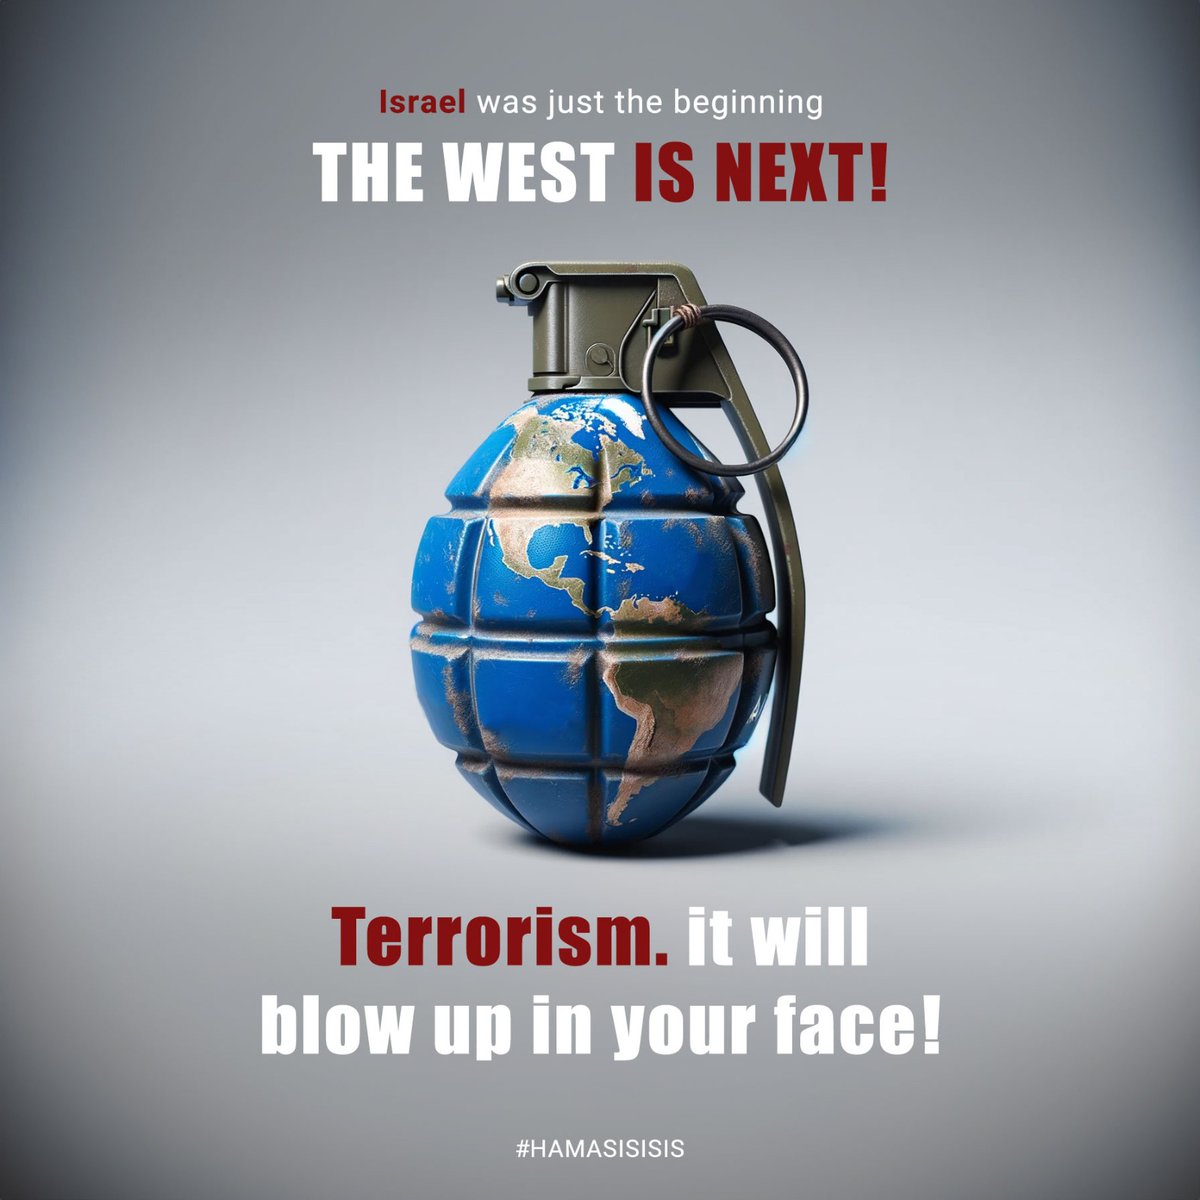 #TheWestlsNext
#HamasIsISIS #Hamas_is_ISIS #ISIS